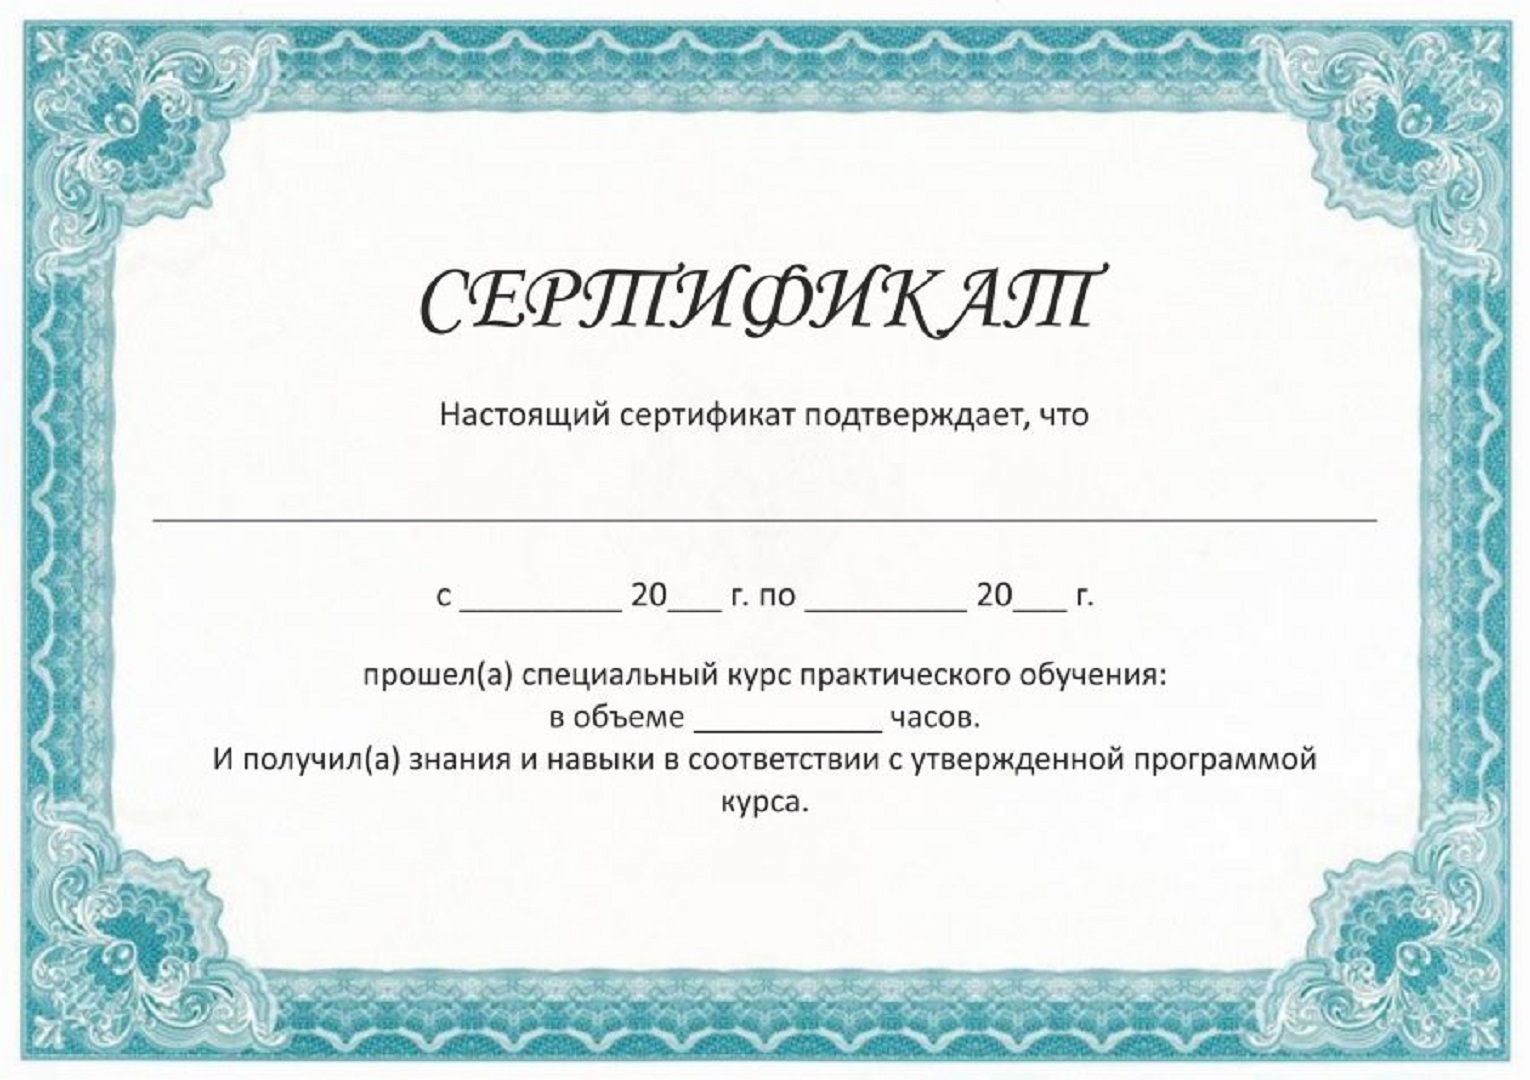 Сертификат. Сертификат образец. Сертификат шаблон. Сертификаты образцы бланков.